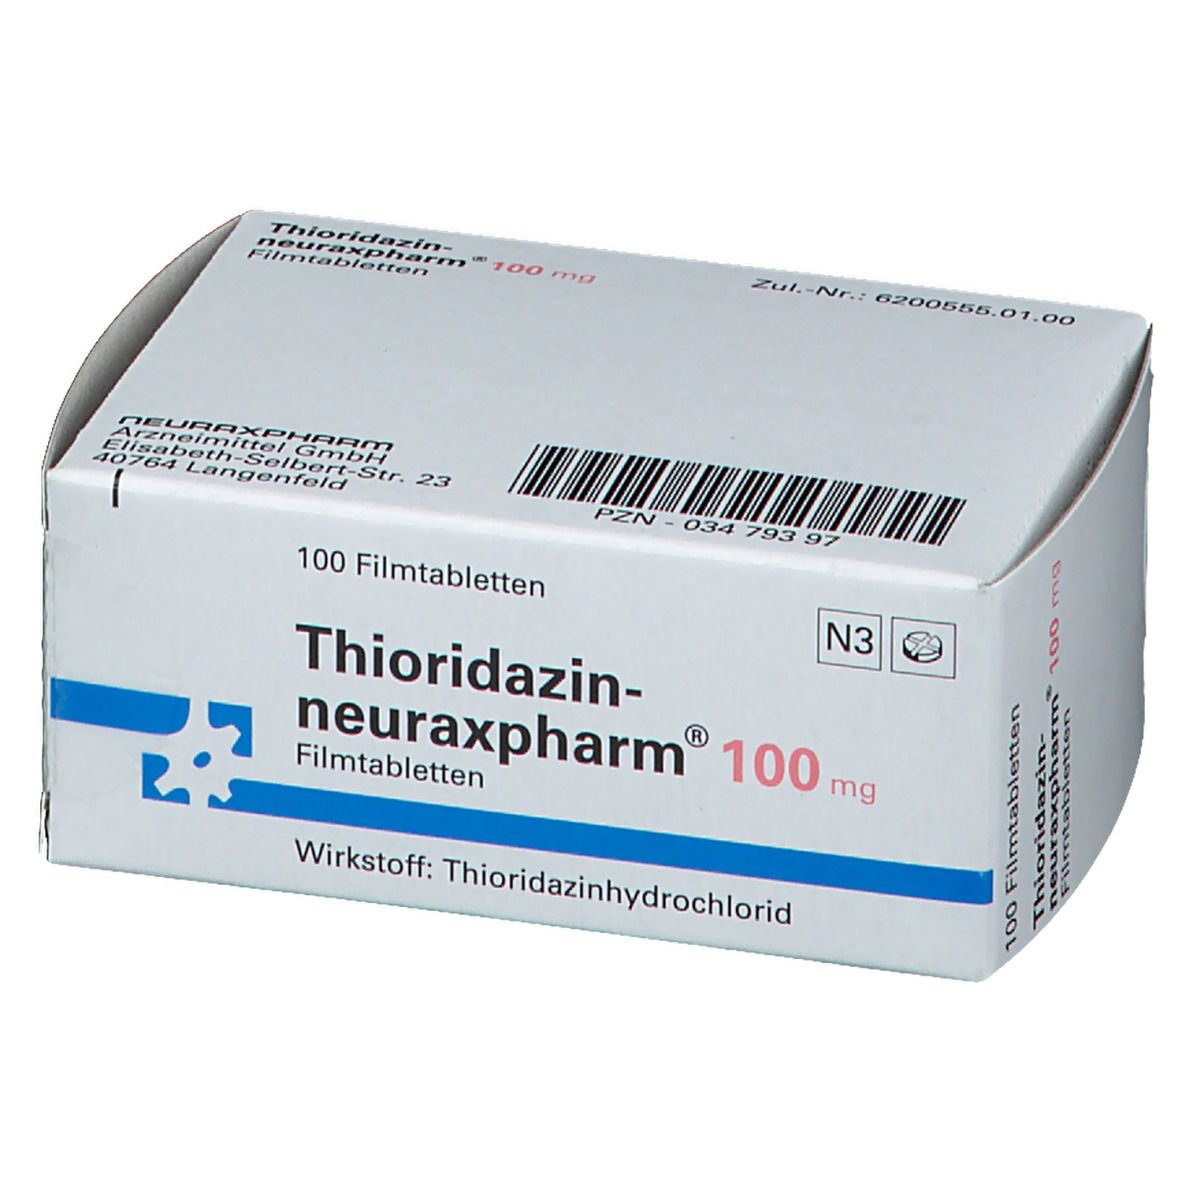 Thioridazin-neuraxpharm® 100 mg